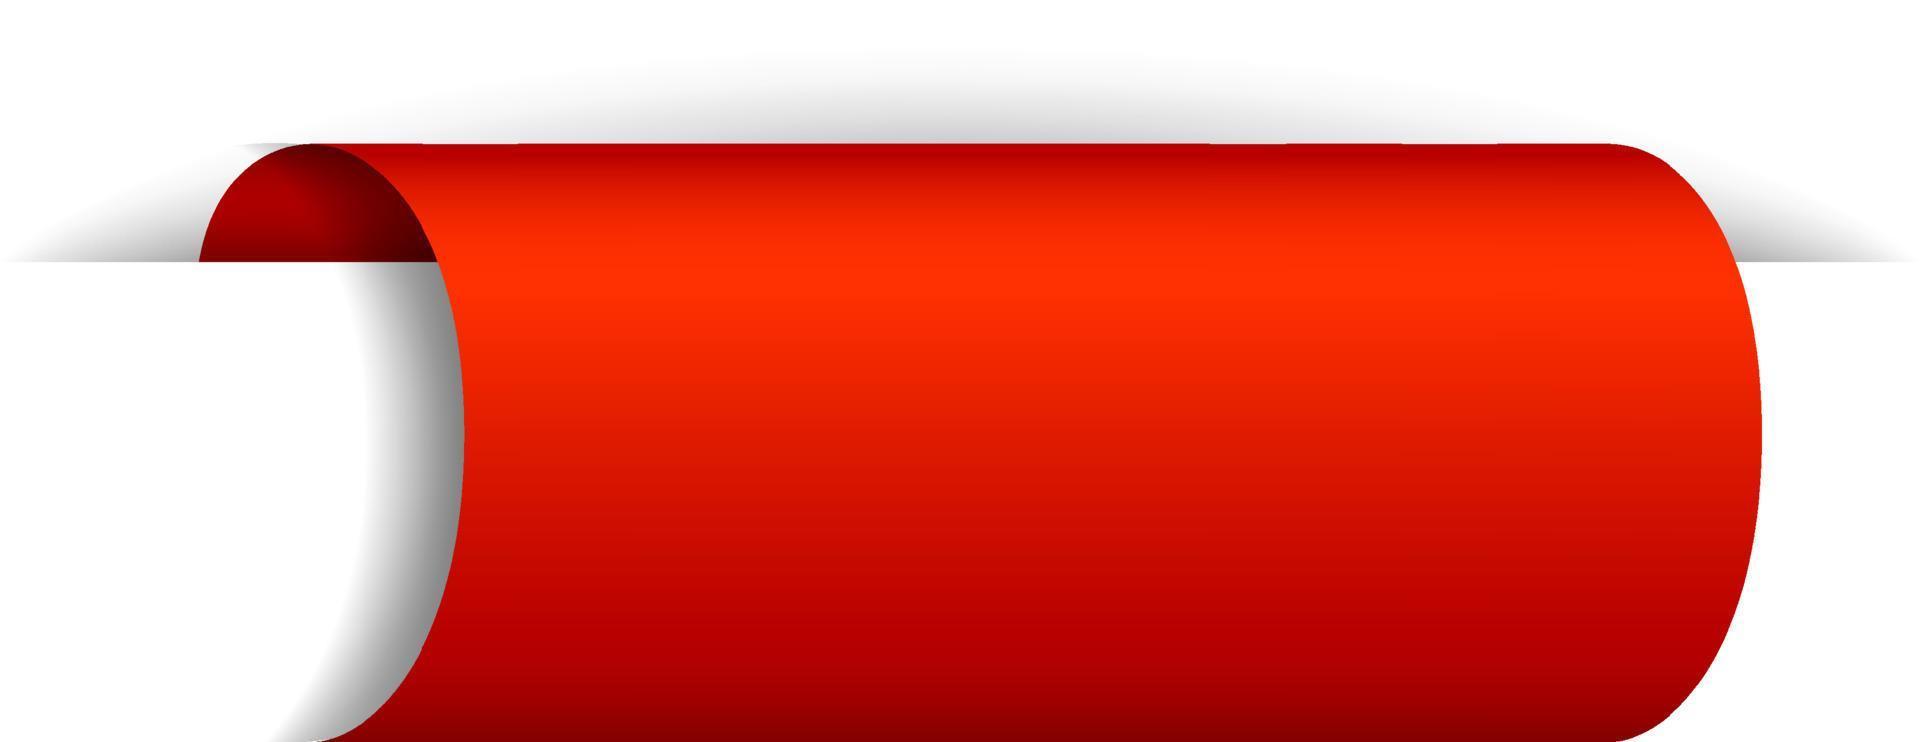 Red banner design on white background vector